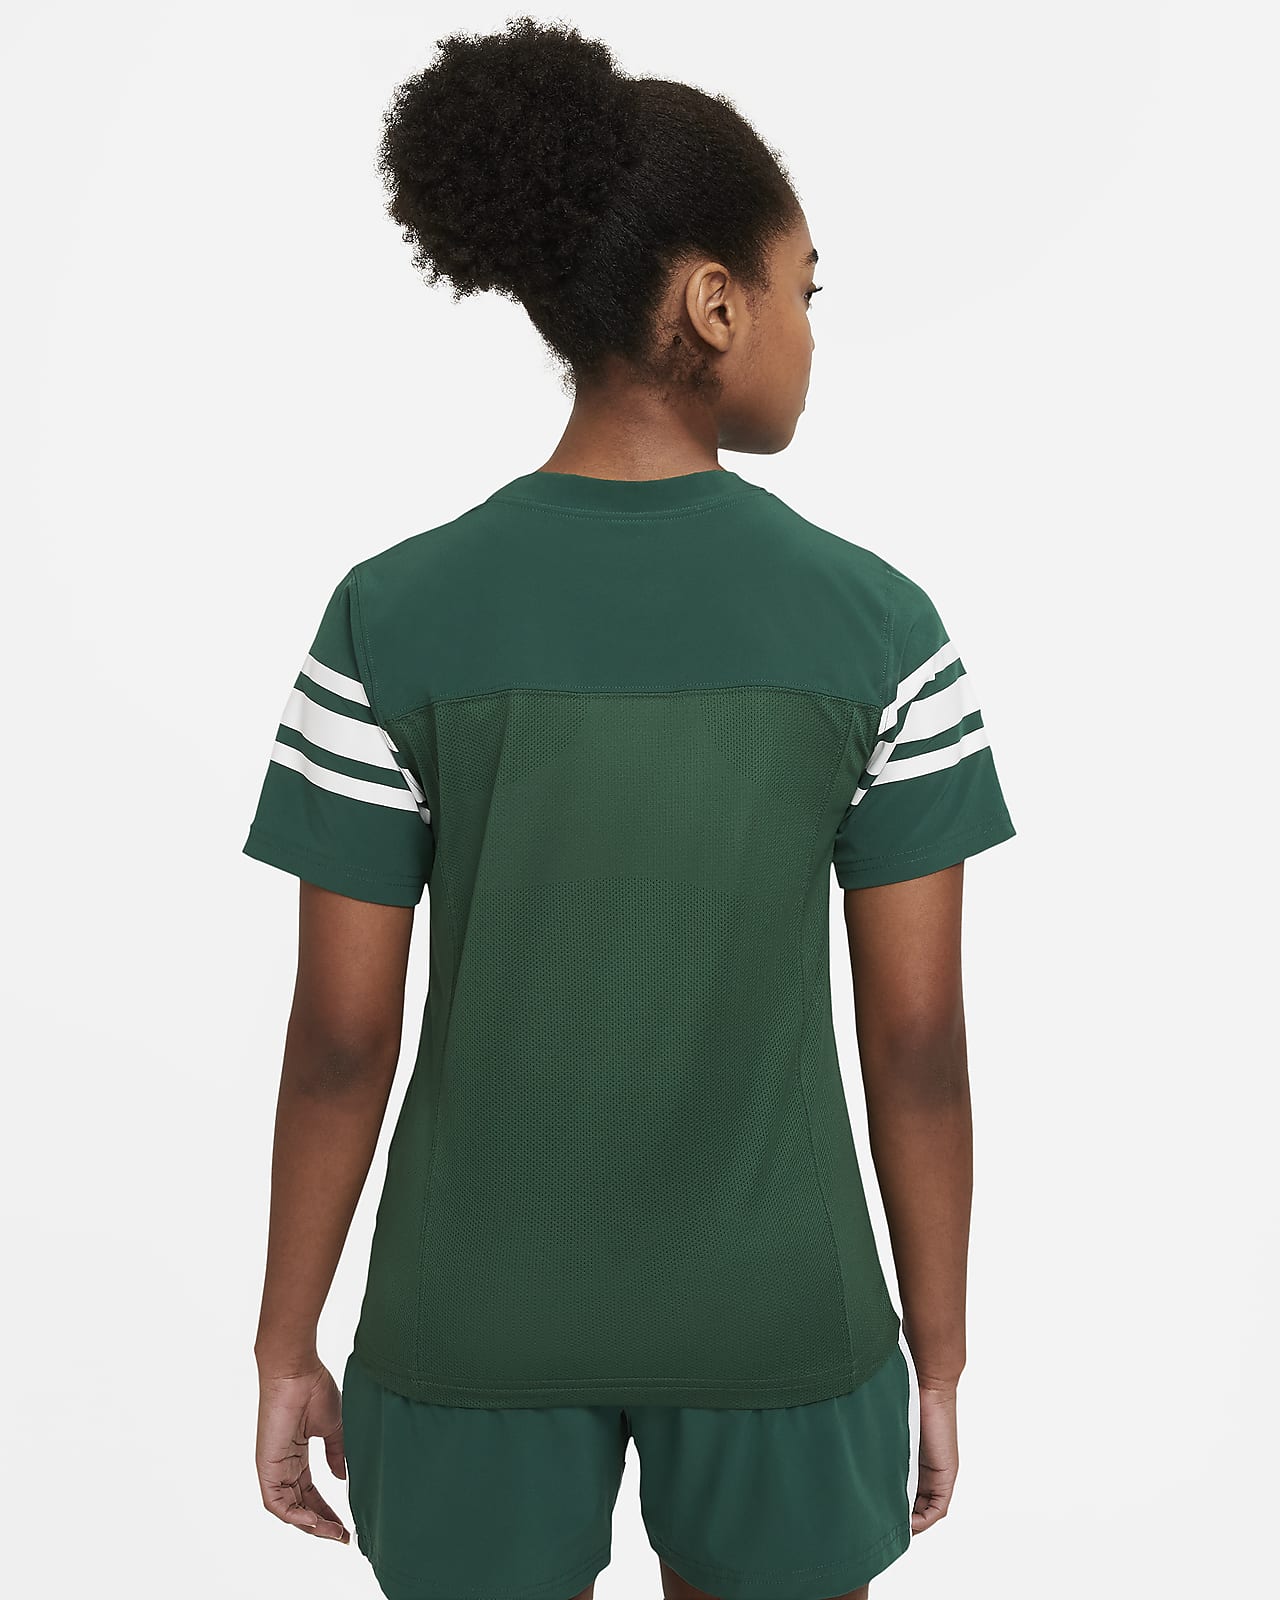 Nike Vapor Women's Flag Football Jersey (Stock). Nike.com